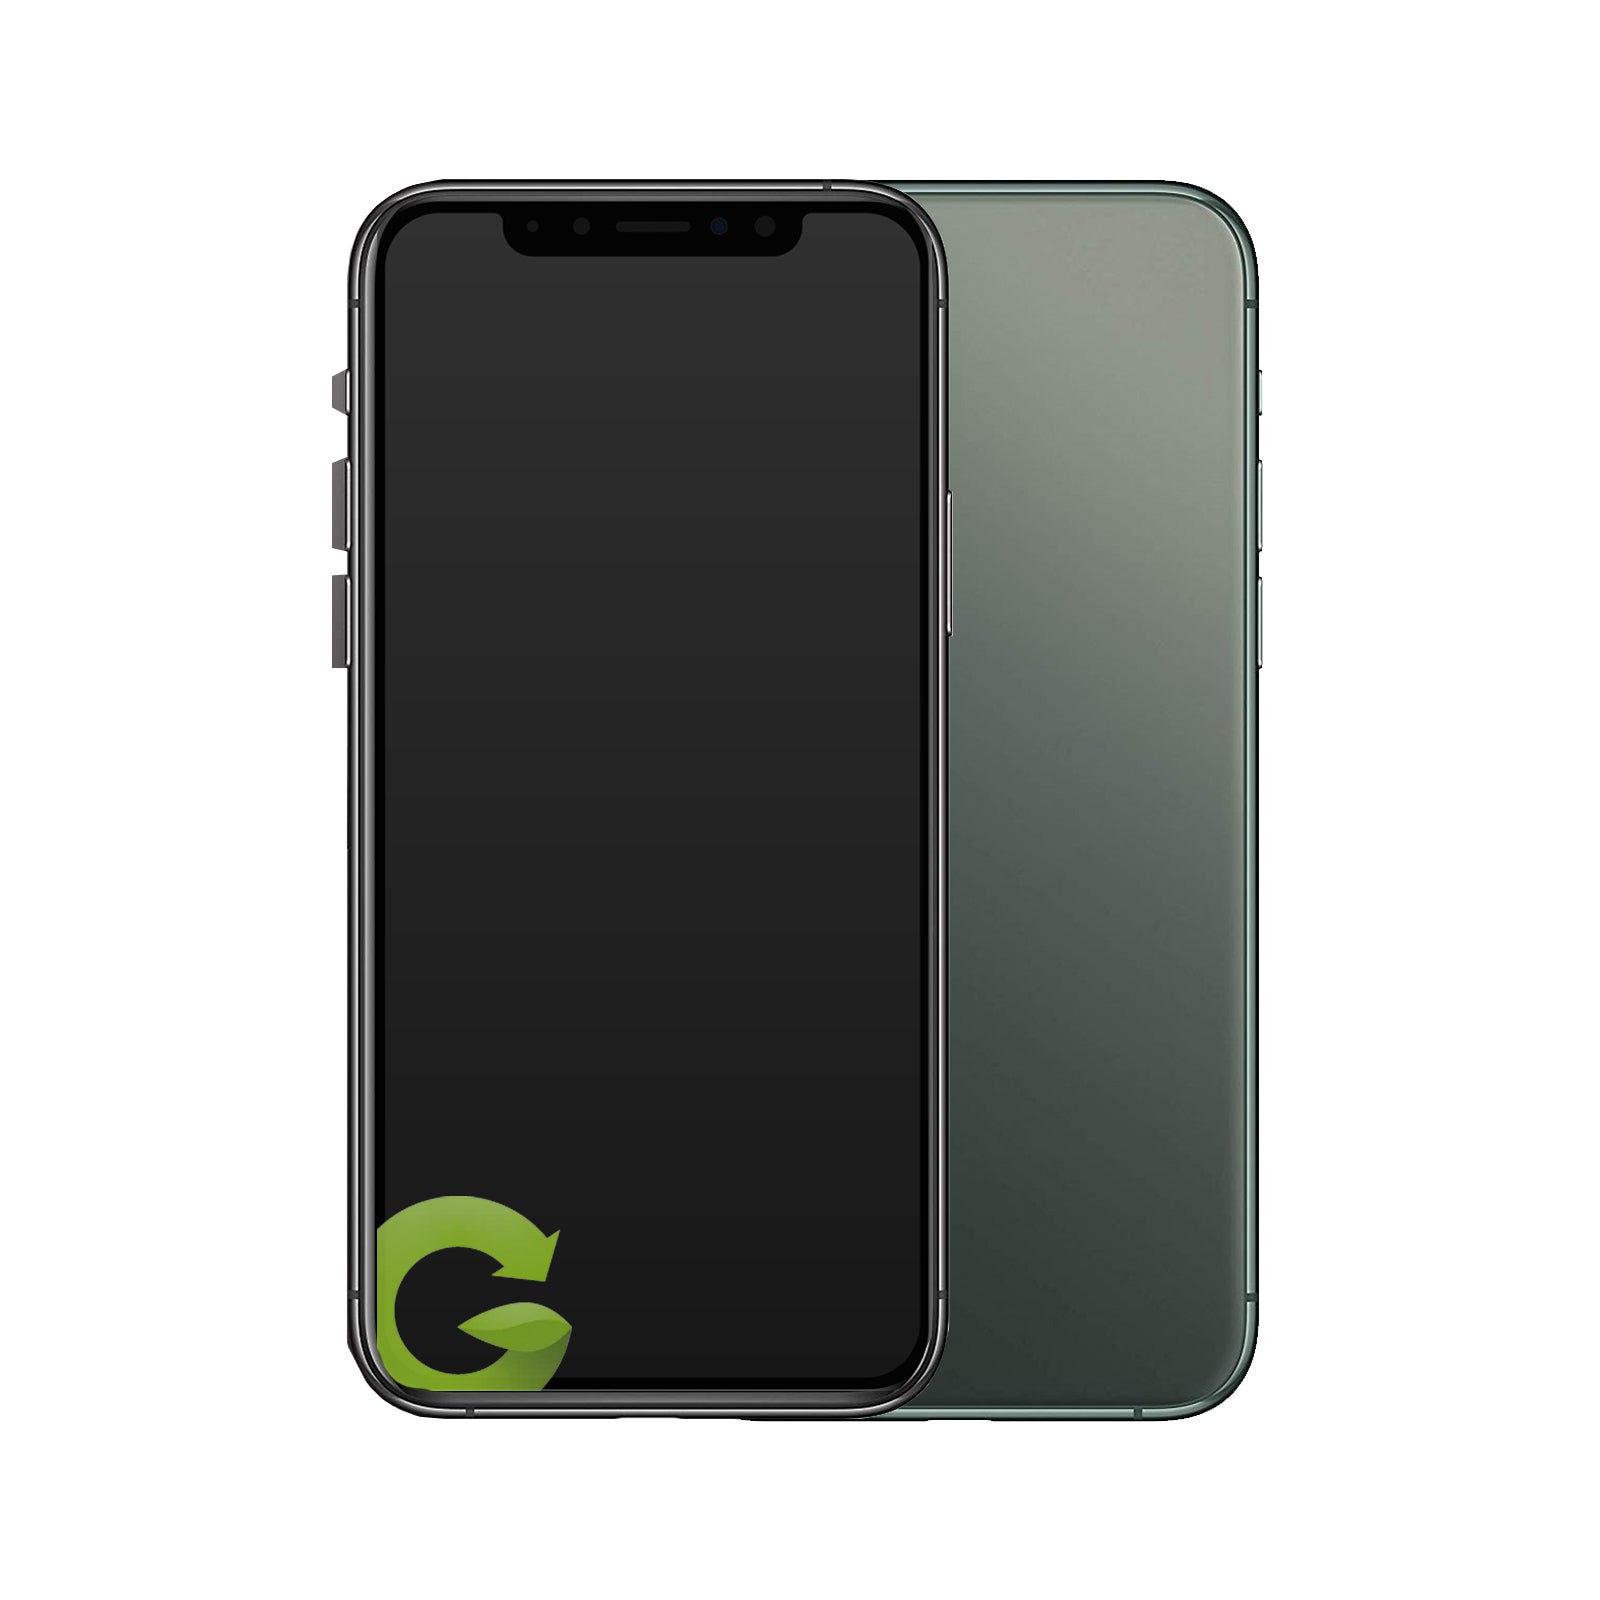 Apple iPhone 11 Pro 64GB Green - Very Good - Refurbished